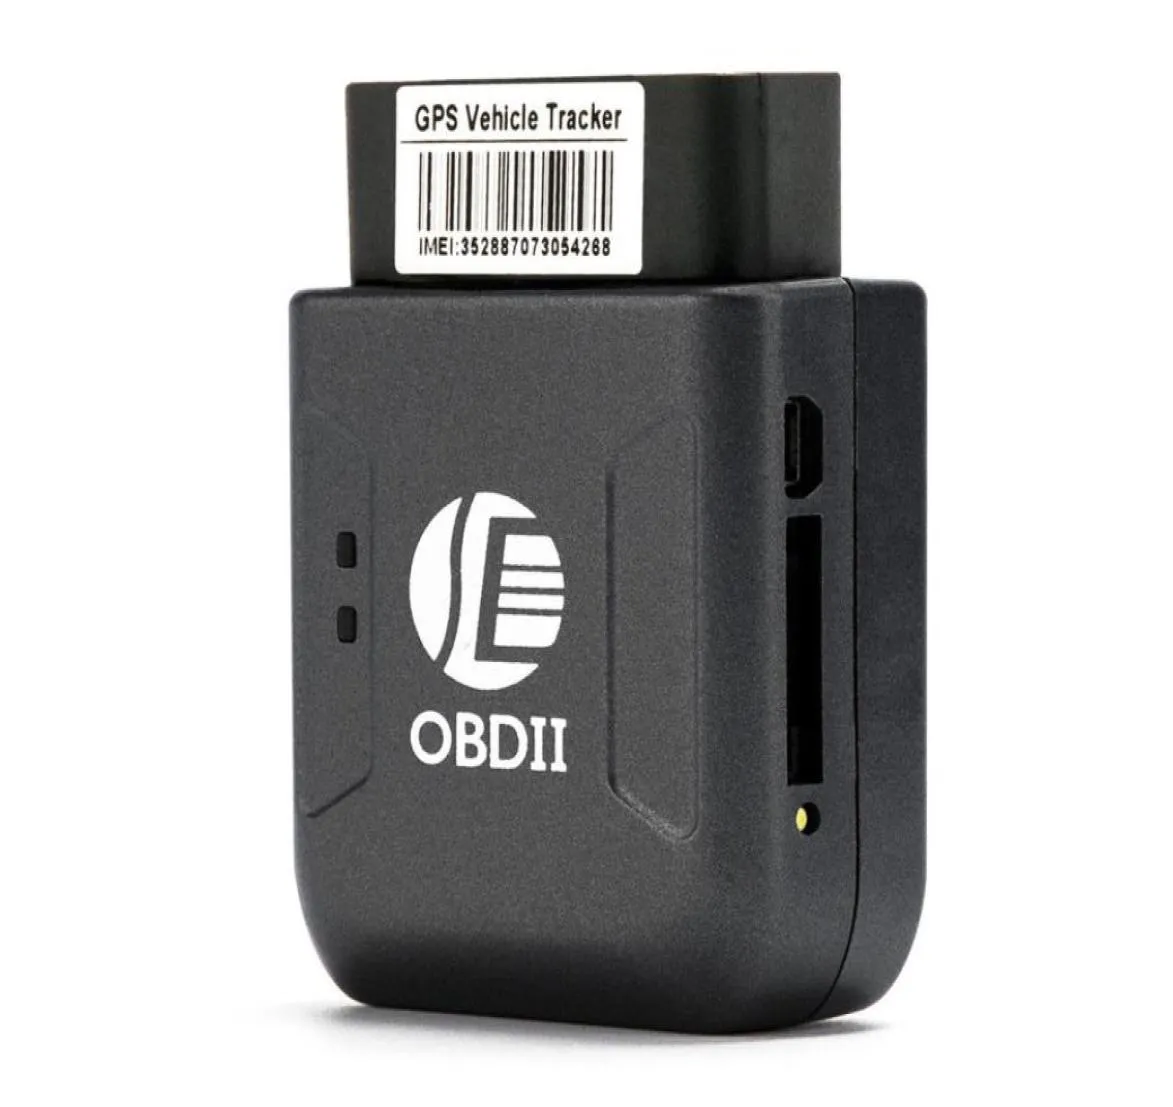 New OBD2 GPS tracker TK206 OBD 2 Real Time GSM Quad Band Antitheft Vibration Alarm GSM GPRS Mini GPRS tracking OBD II car gps4260243